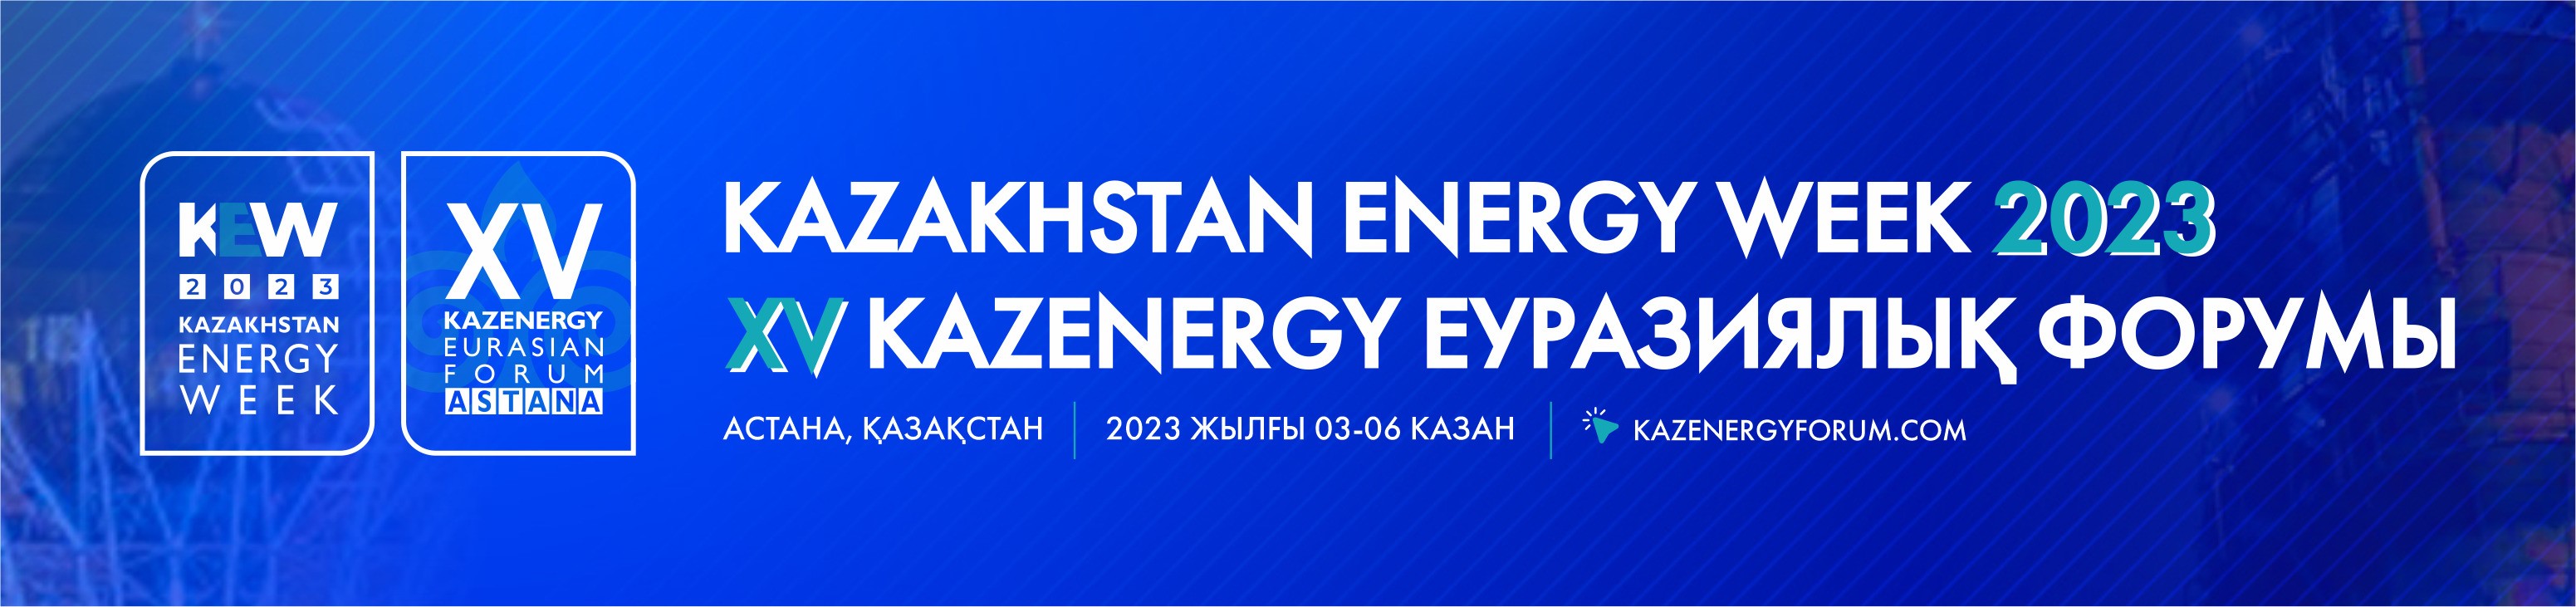 Kazakhstan Energy Week - 2023